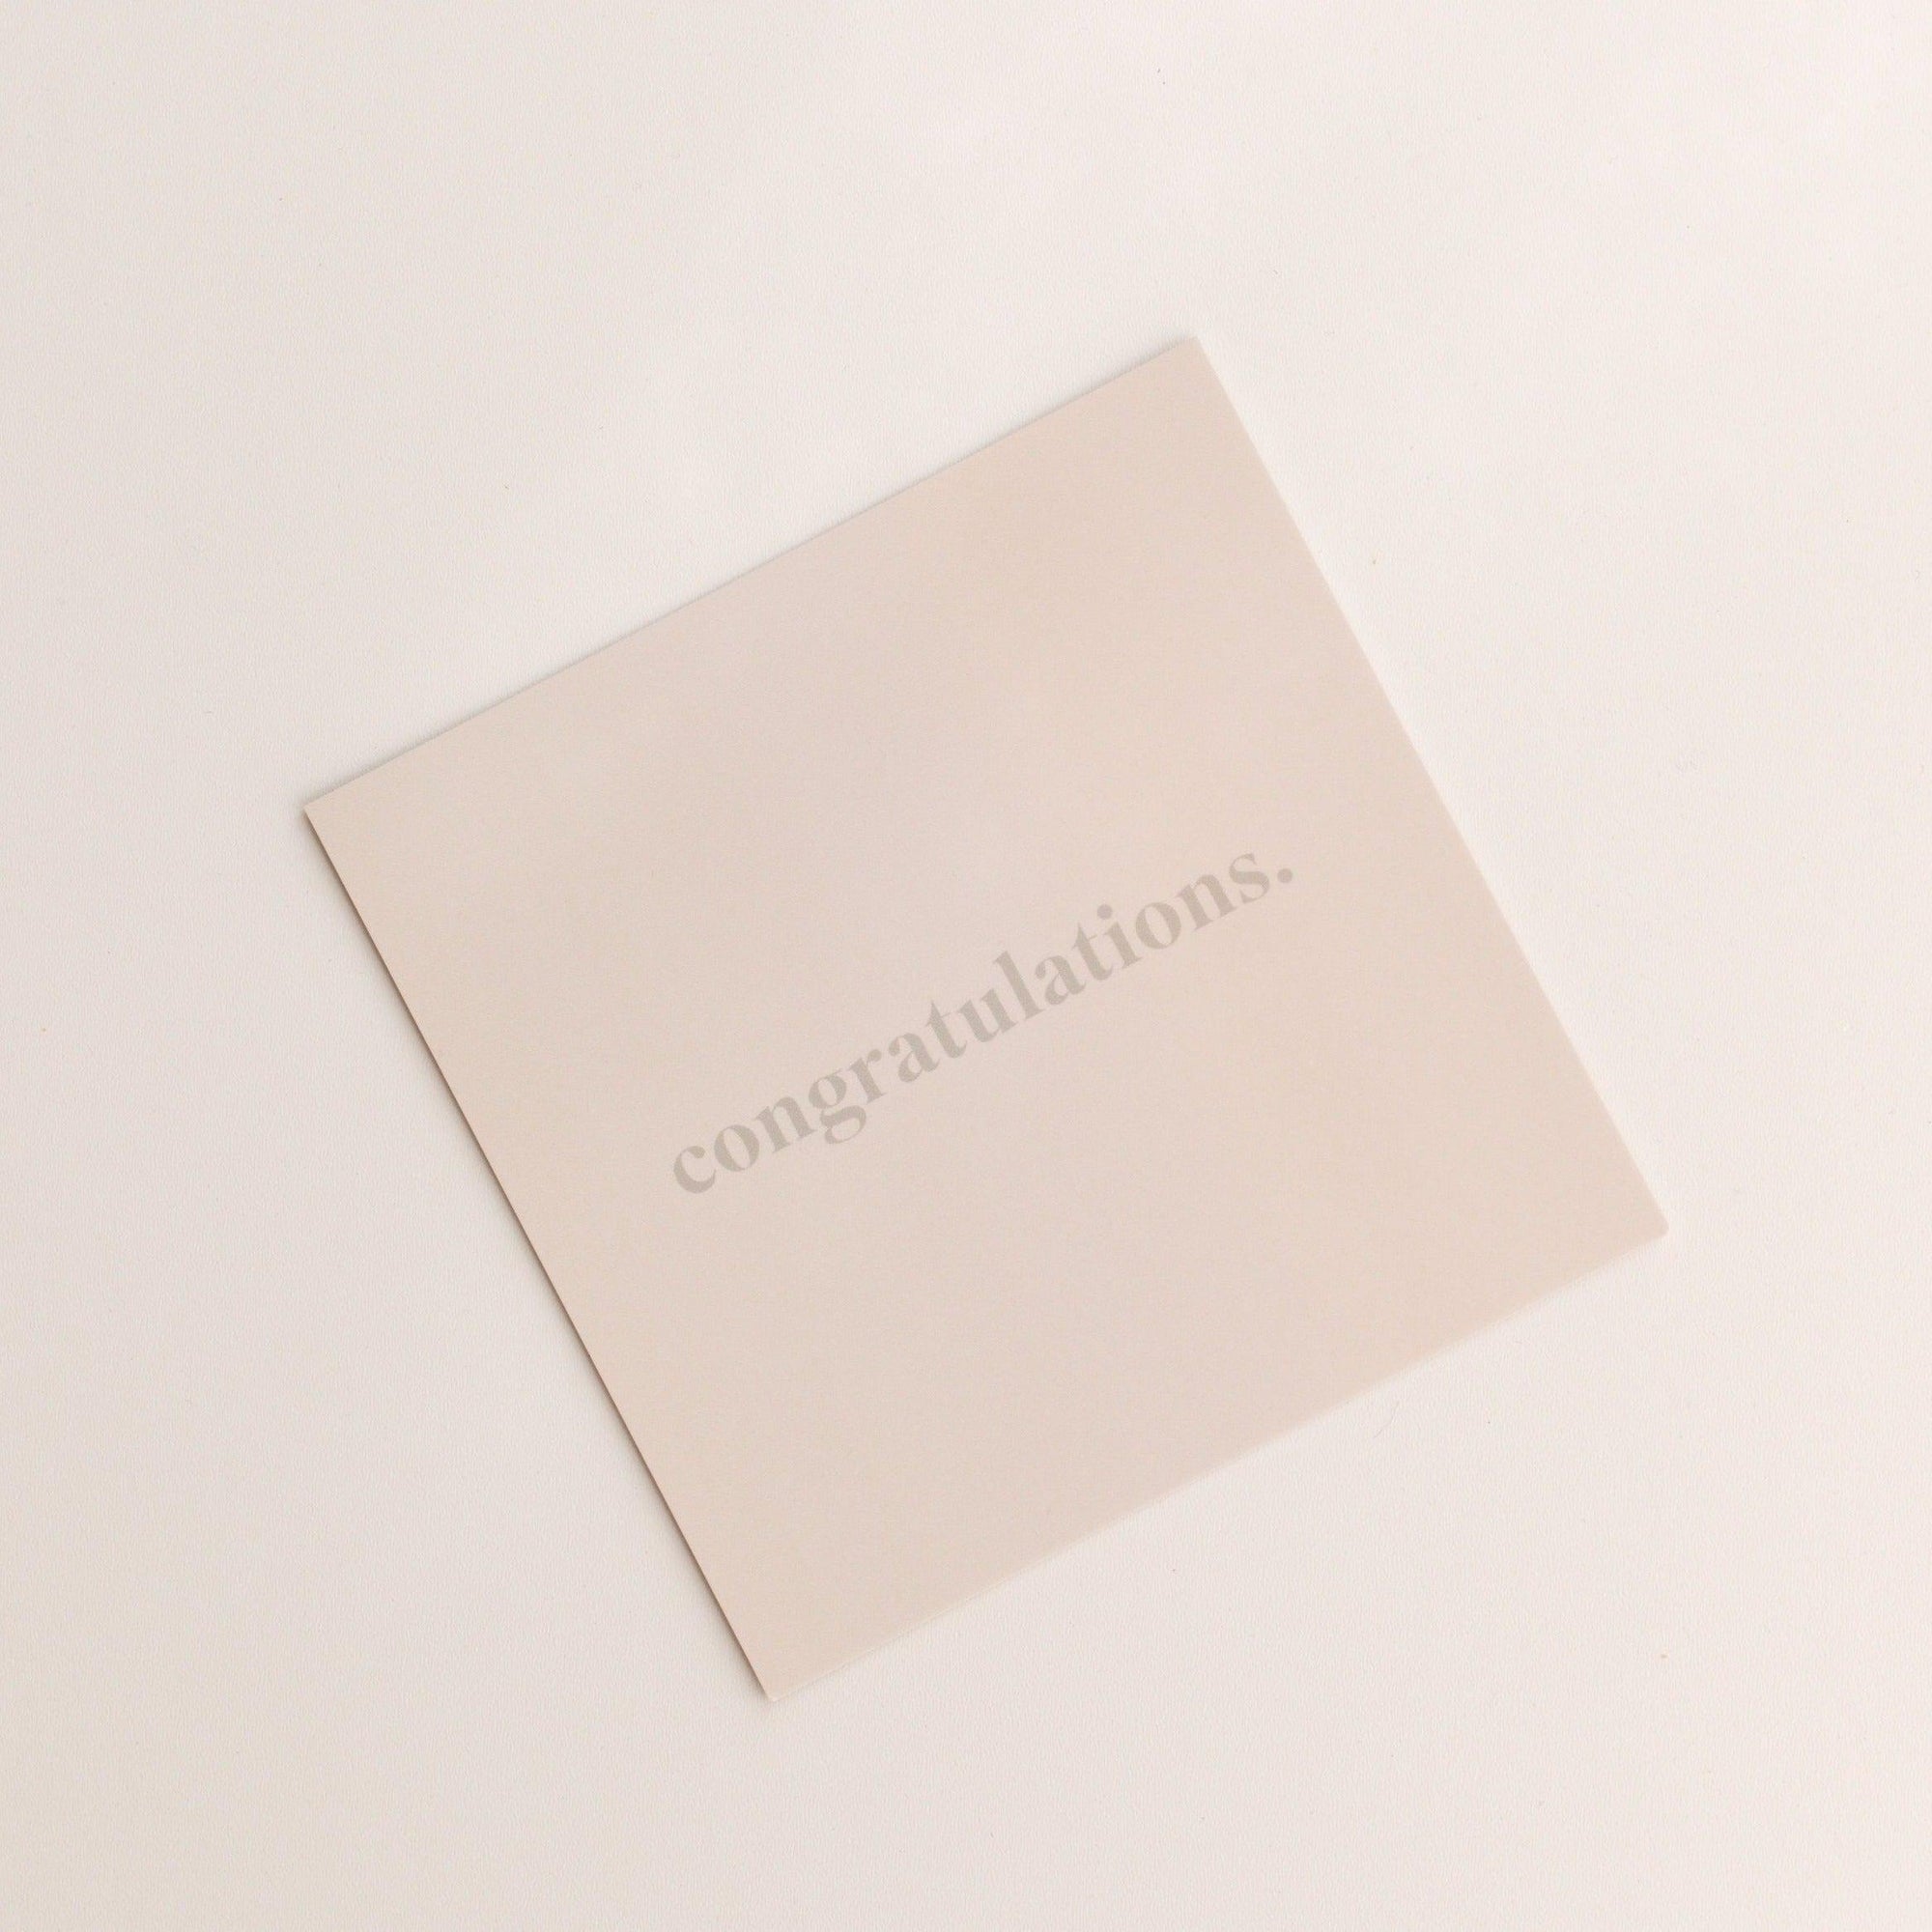 congratulations | gift card